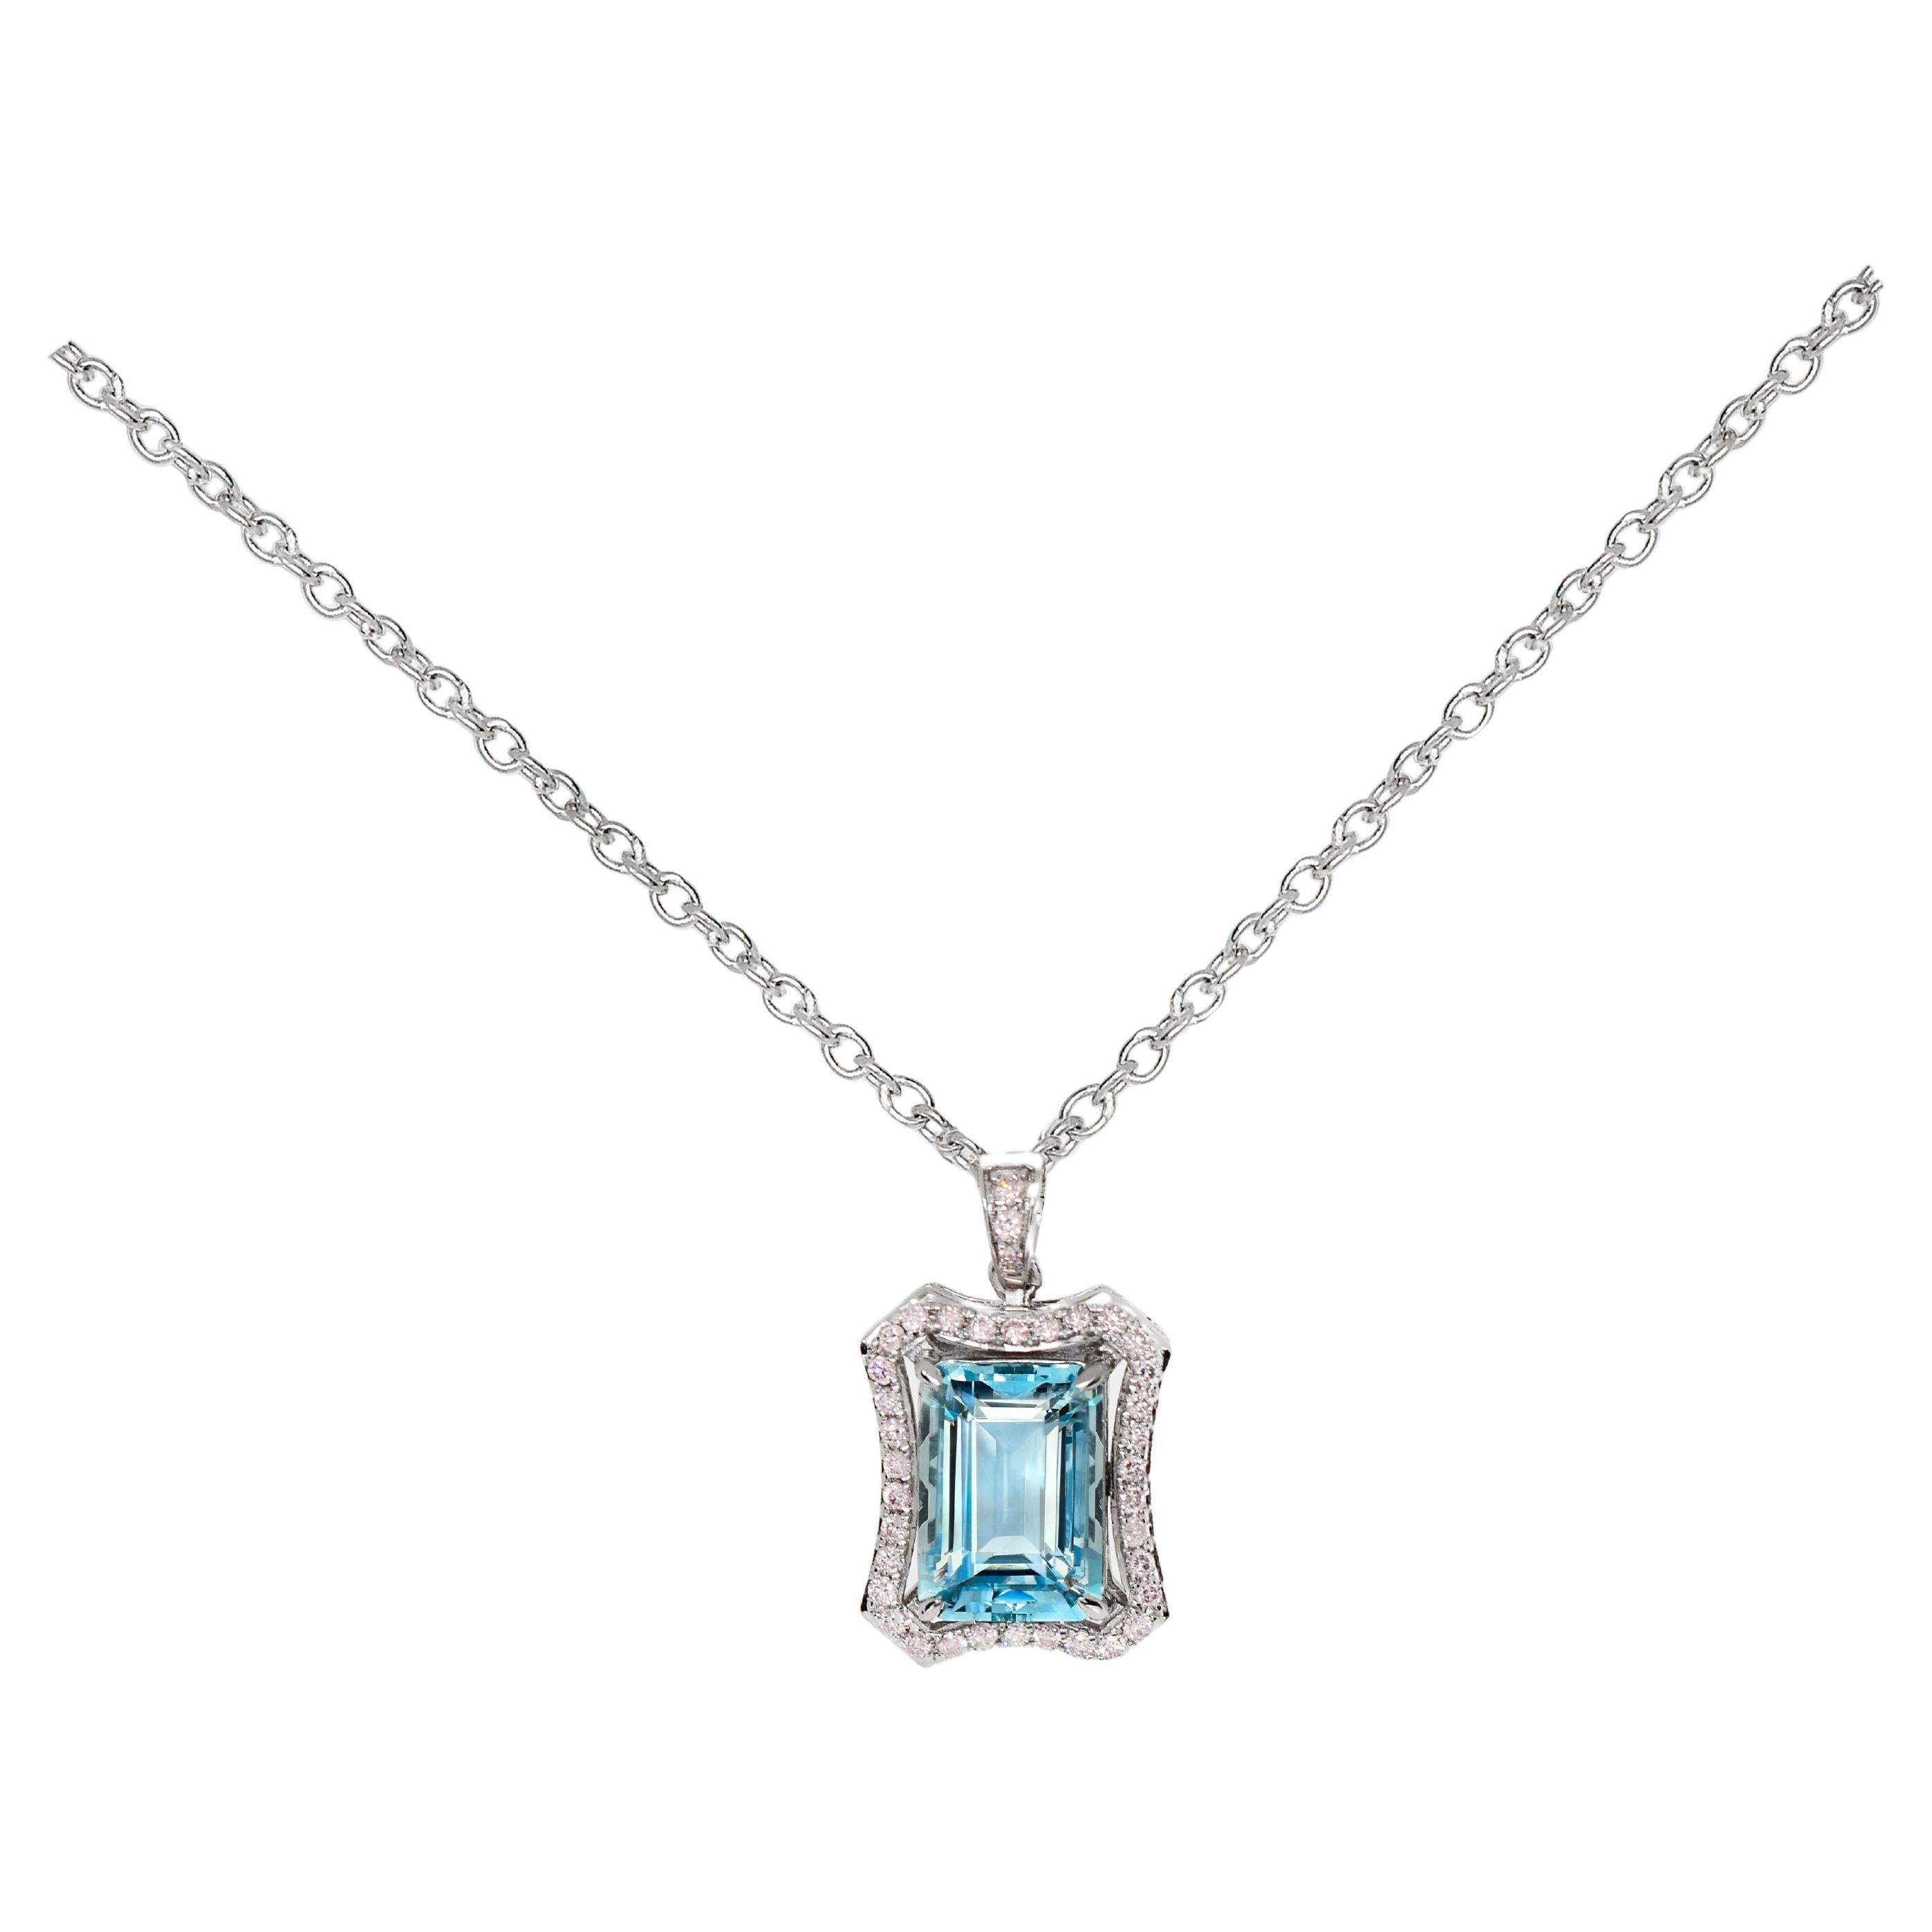 Collier pendentif IGI 14 carats aigue-marine et diamants roses de 2,21 carats